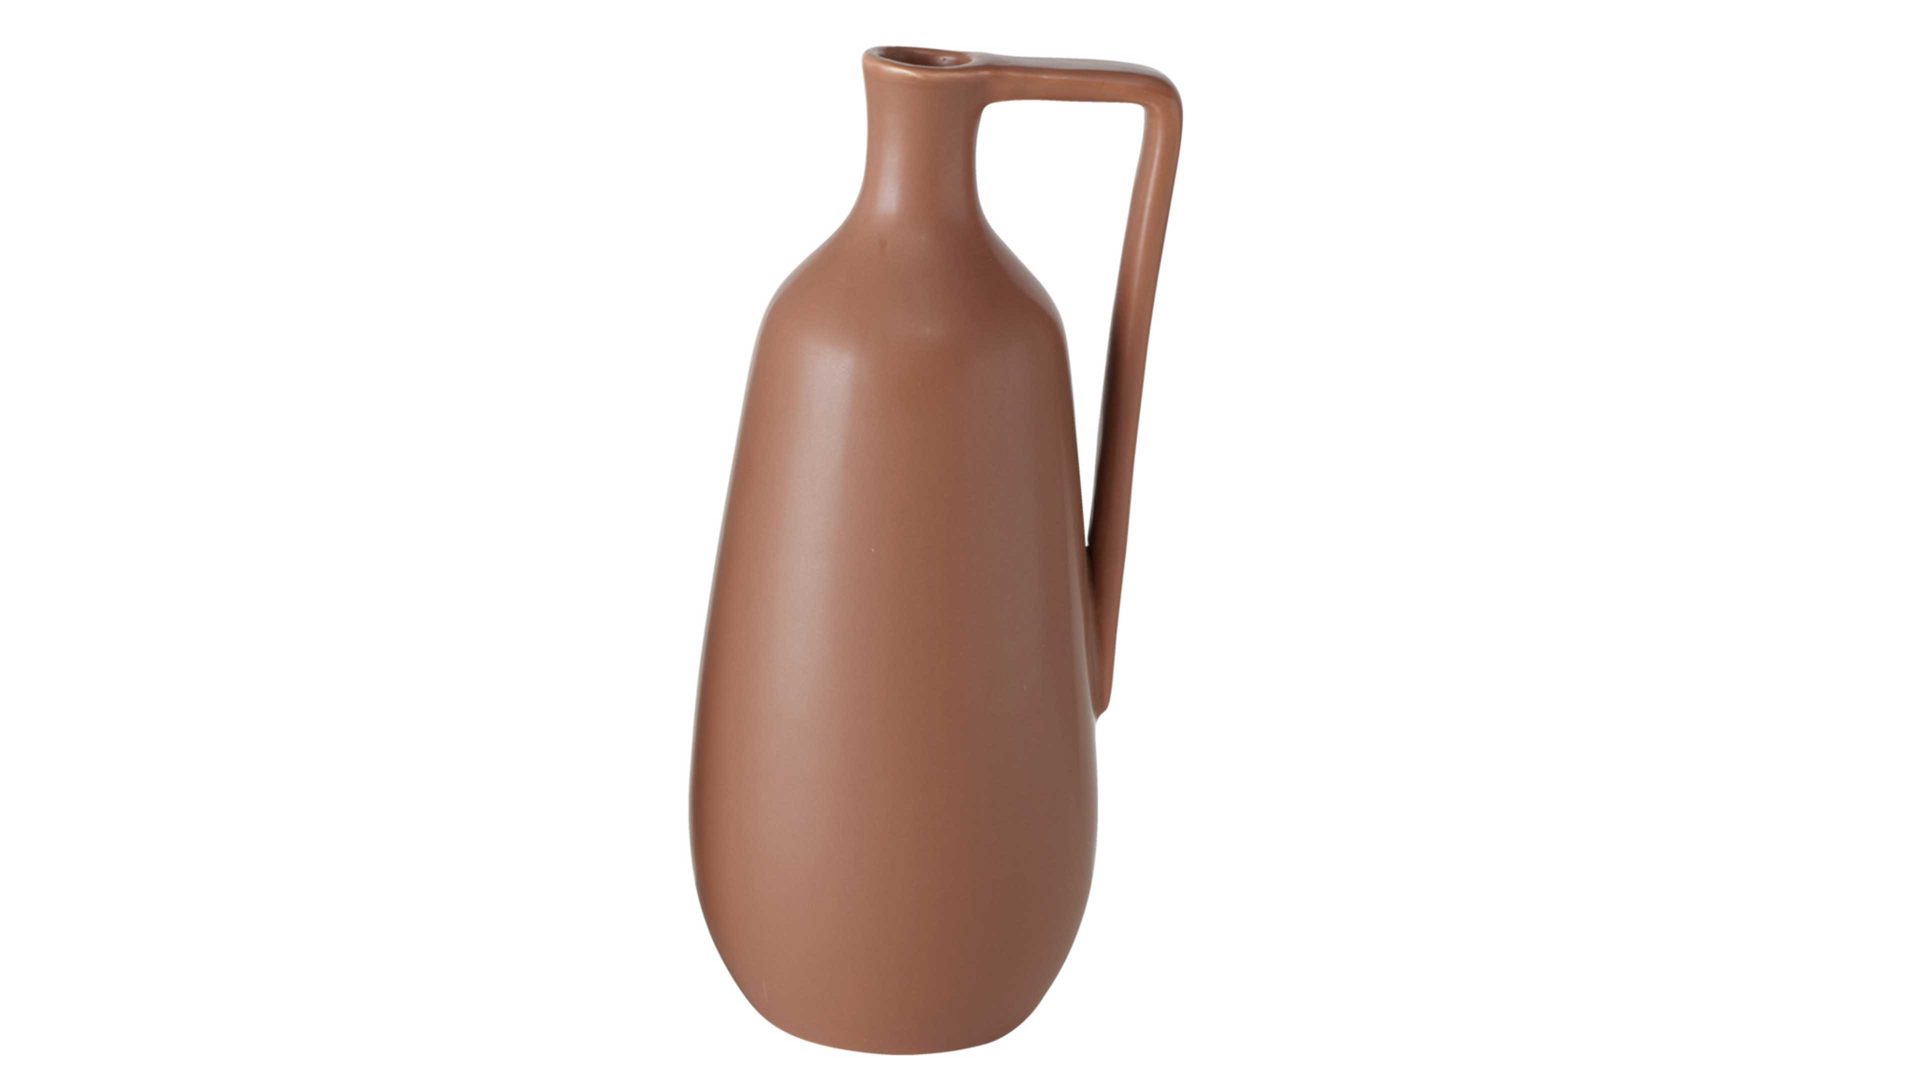 Vase Interliving BEST BUDDYS! aus Keramik in Braun Interliving BEST BUDDYS! Vase Naimo braunes Steingut – Höhe ca. 21 cm